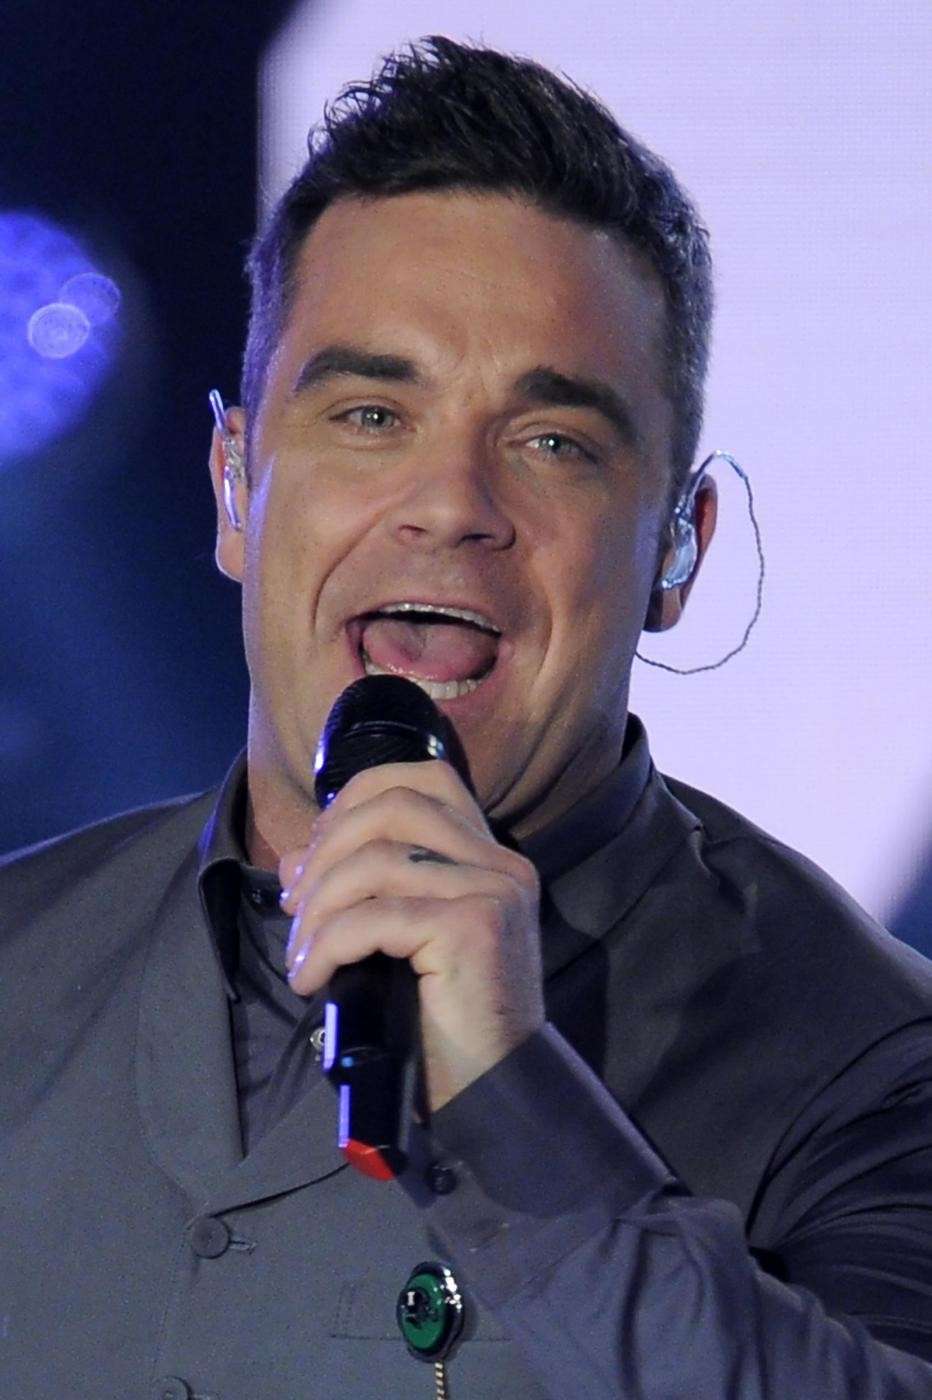 Vip gay, Robbie Williams